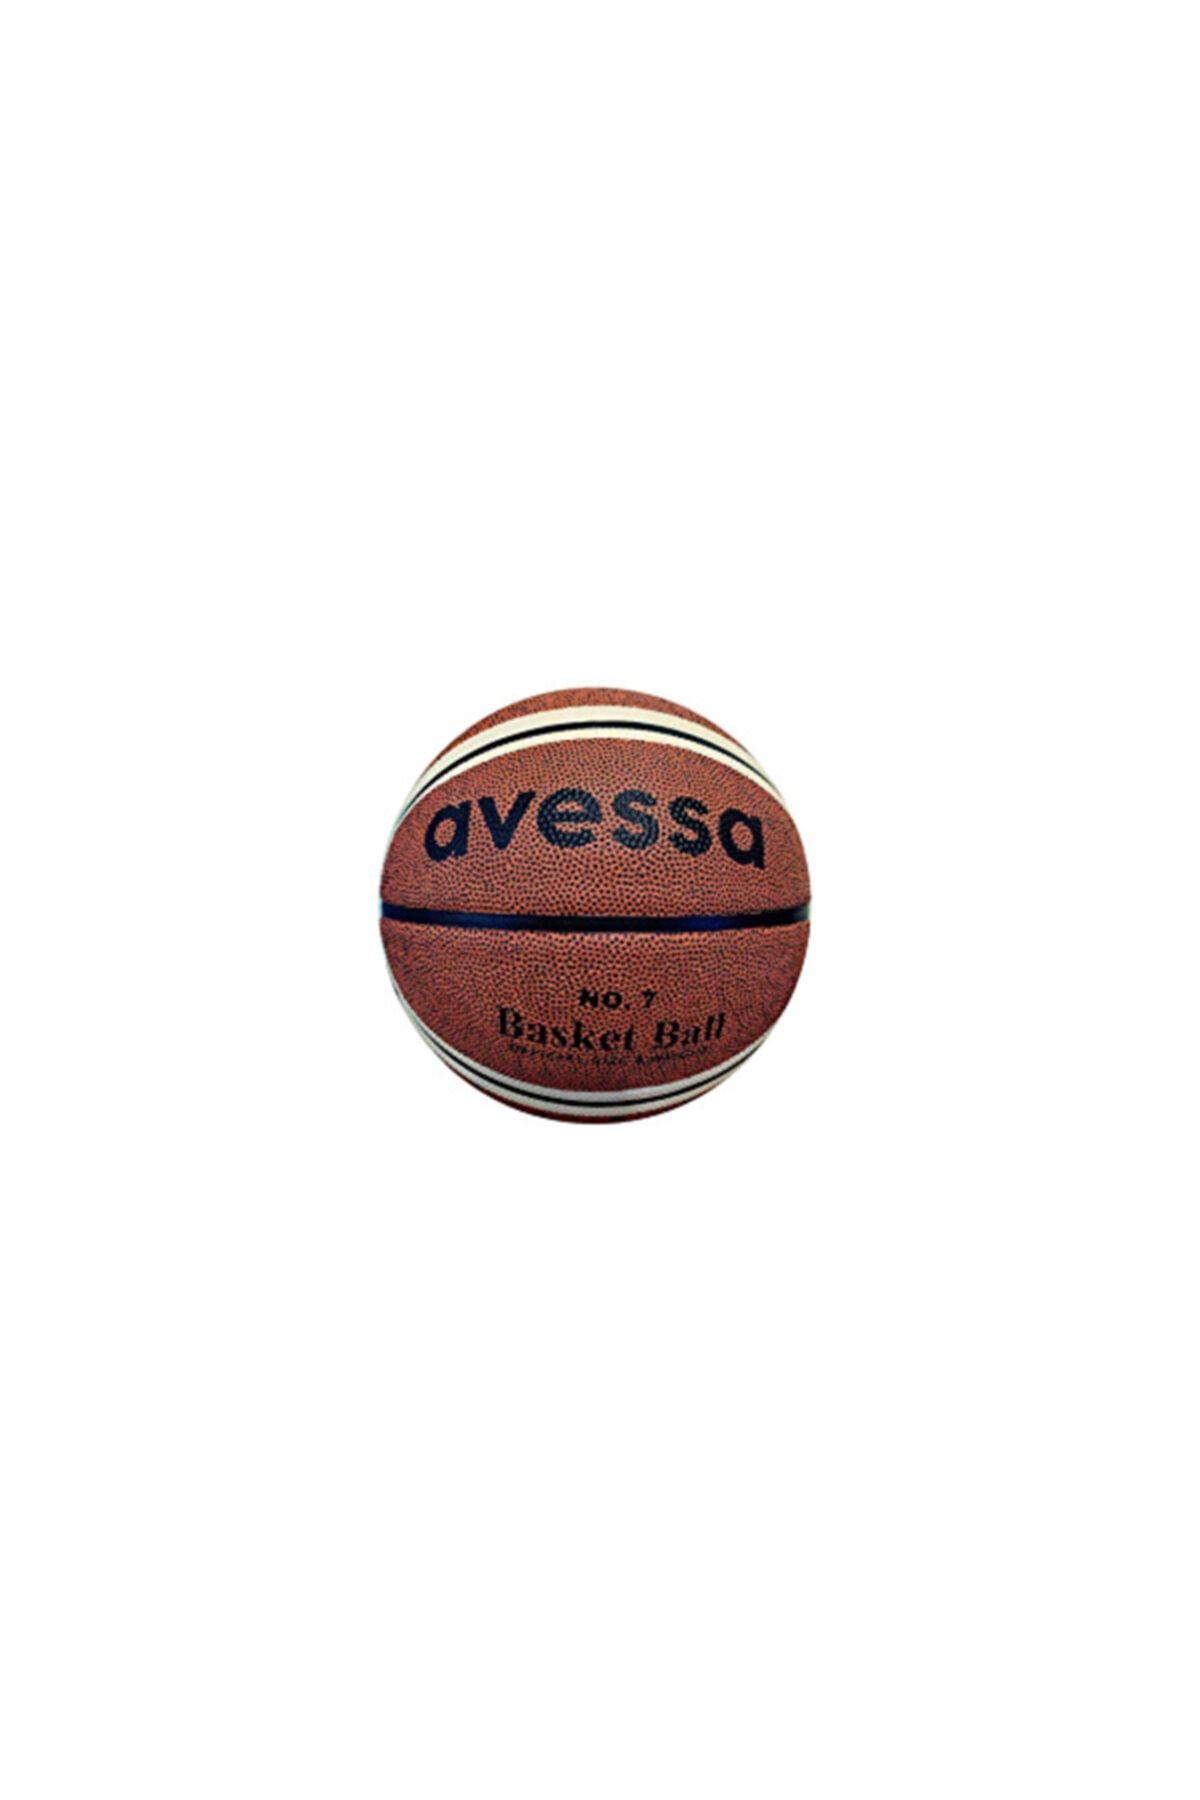 Avessa Outdoor Basketbol Topu